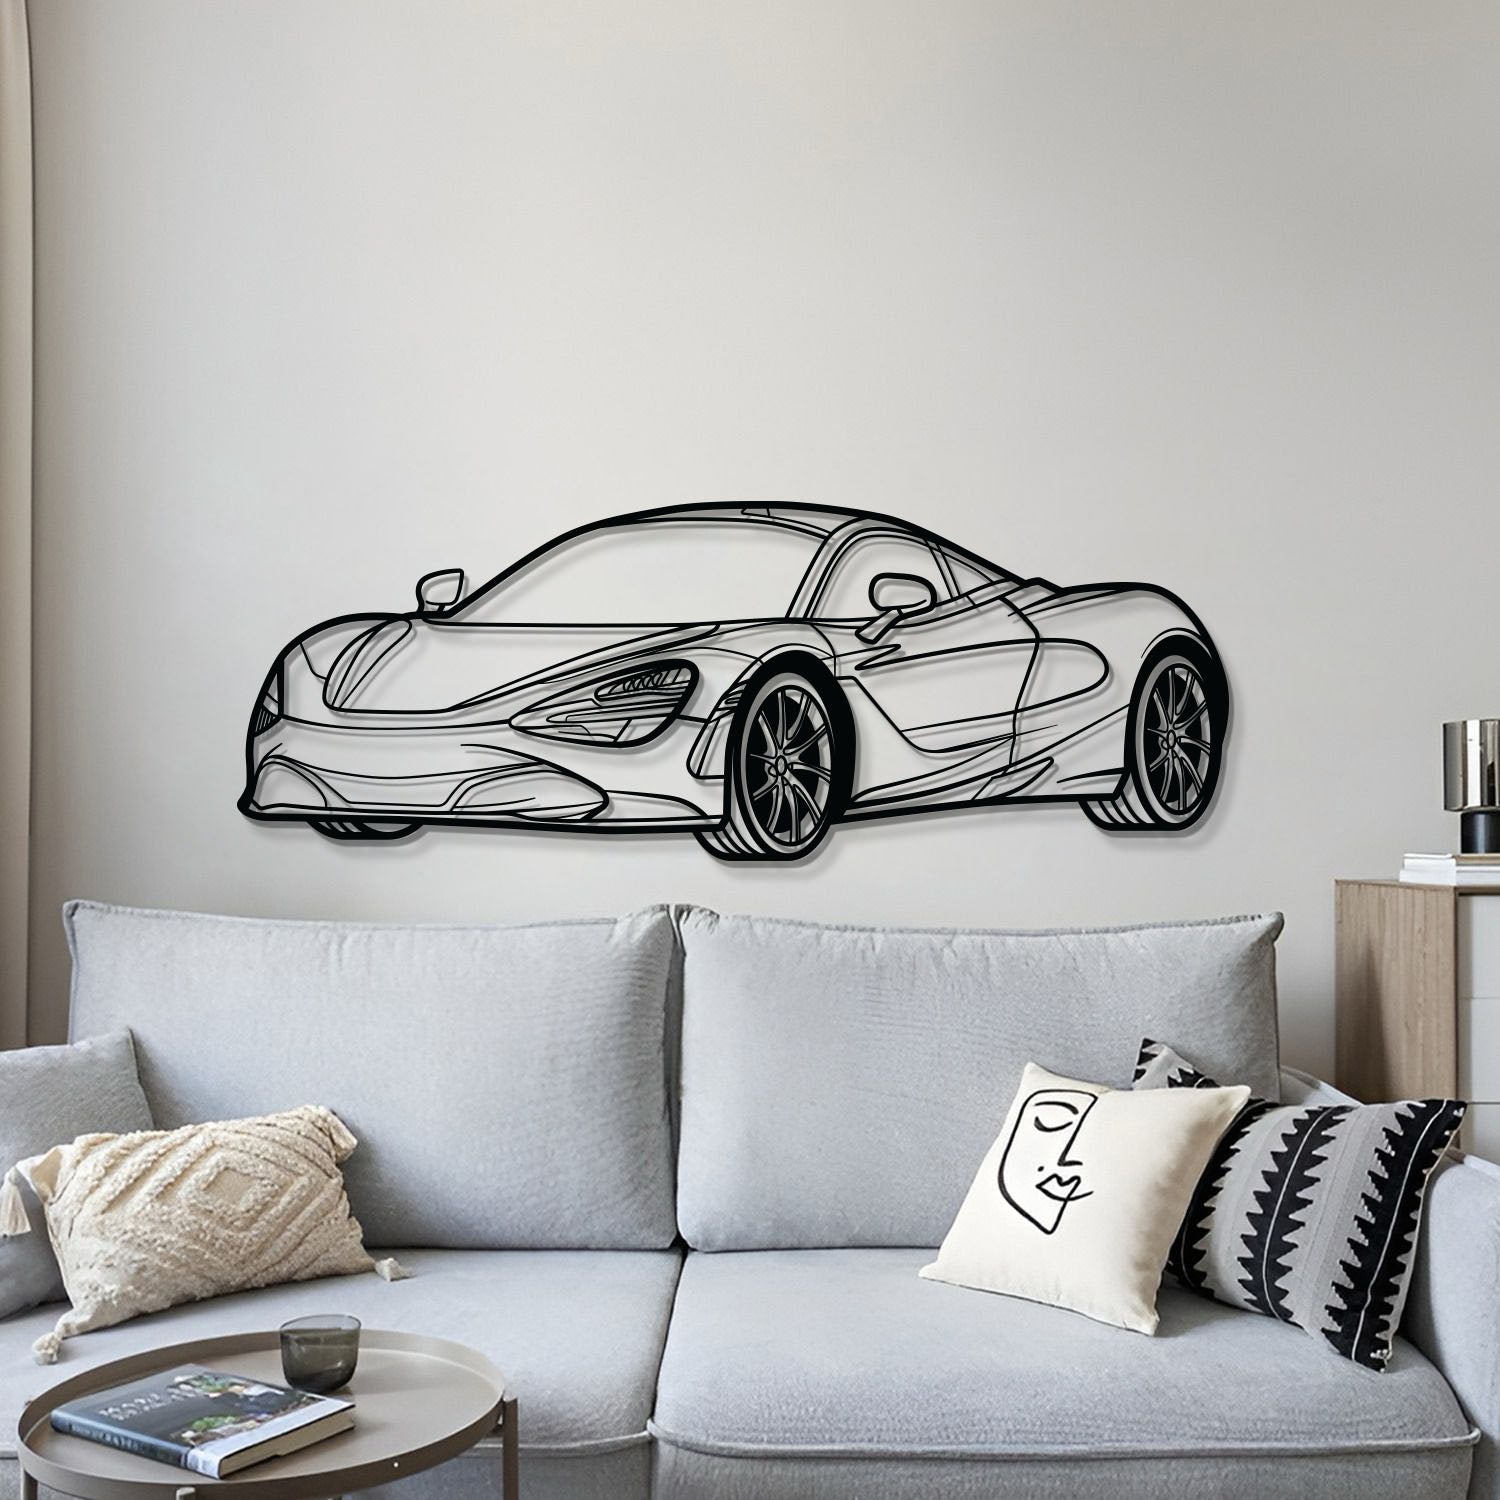 720S Perspective Metal Car Wall Art - MT1129